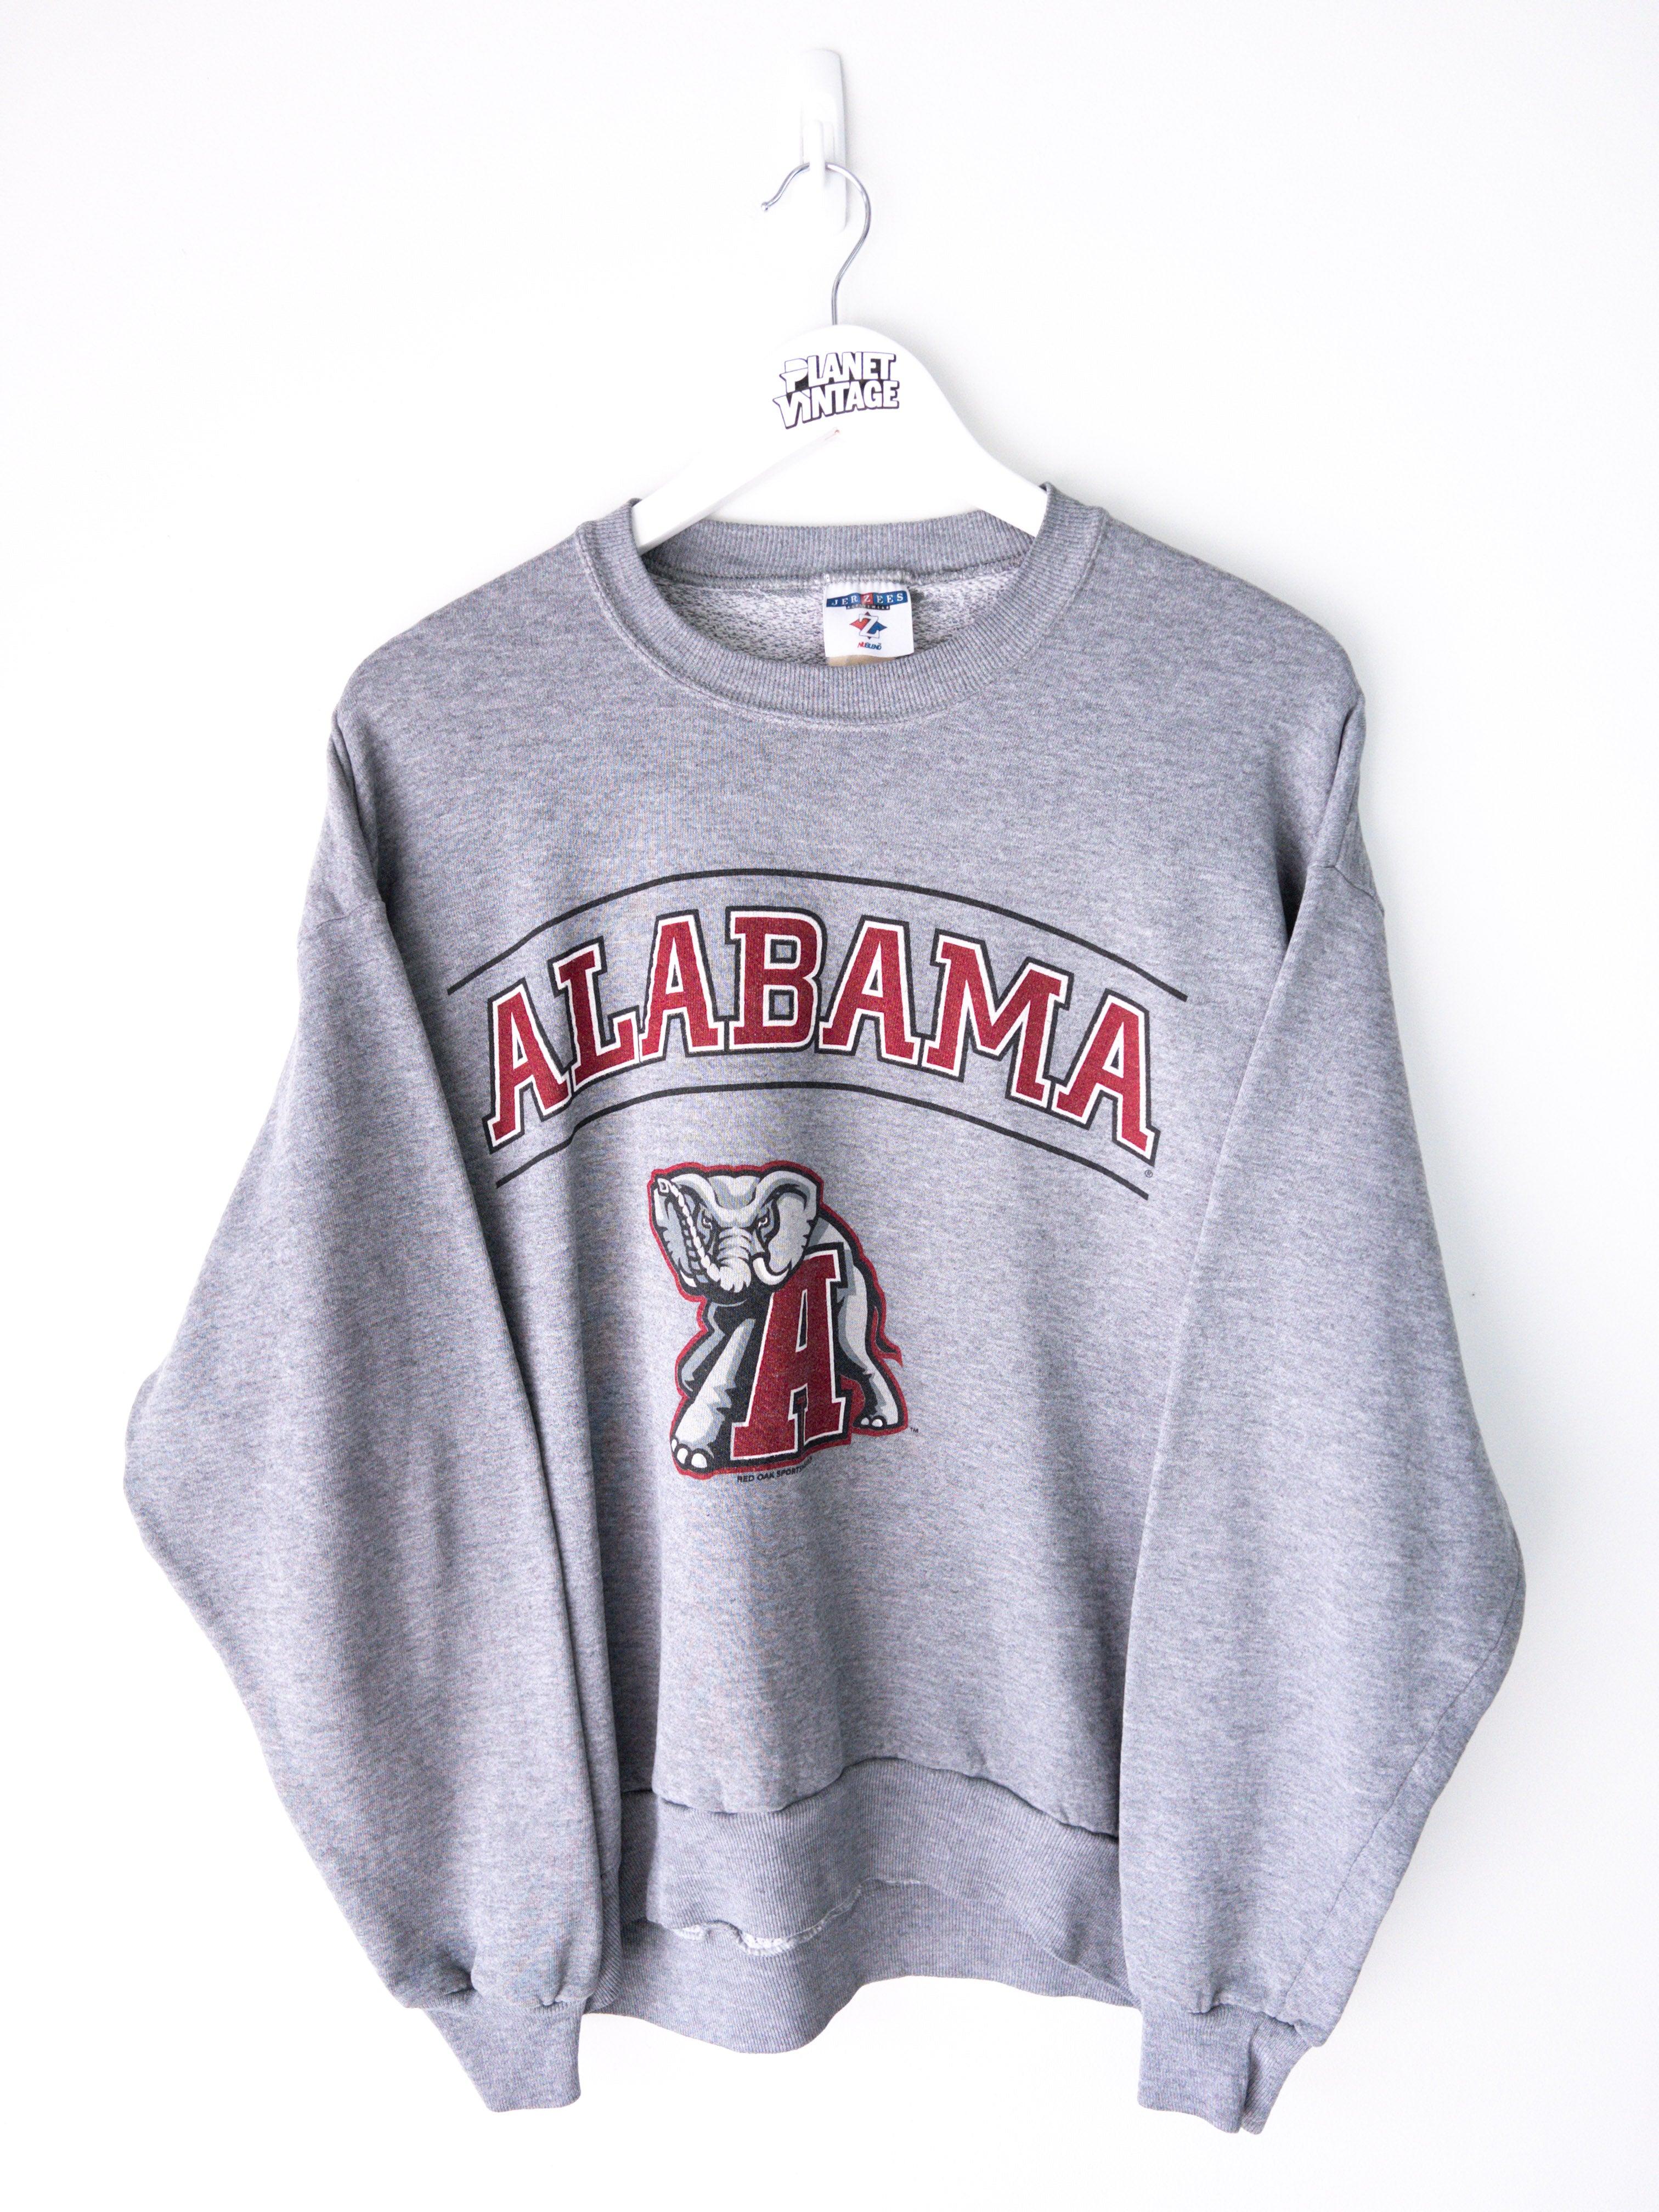 Vintage Alabama Crimson Tide Sweatshirt (M) - Planet Vintage Store